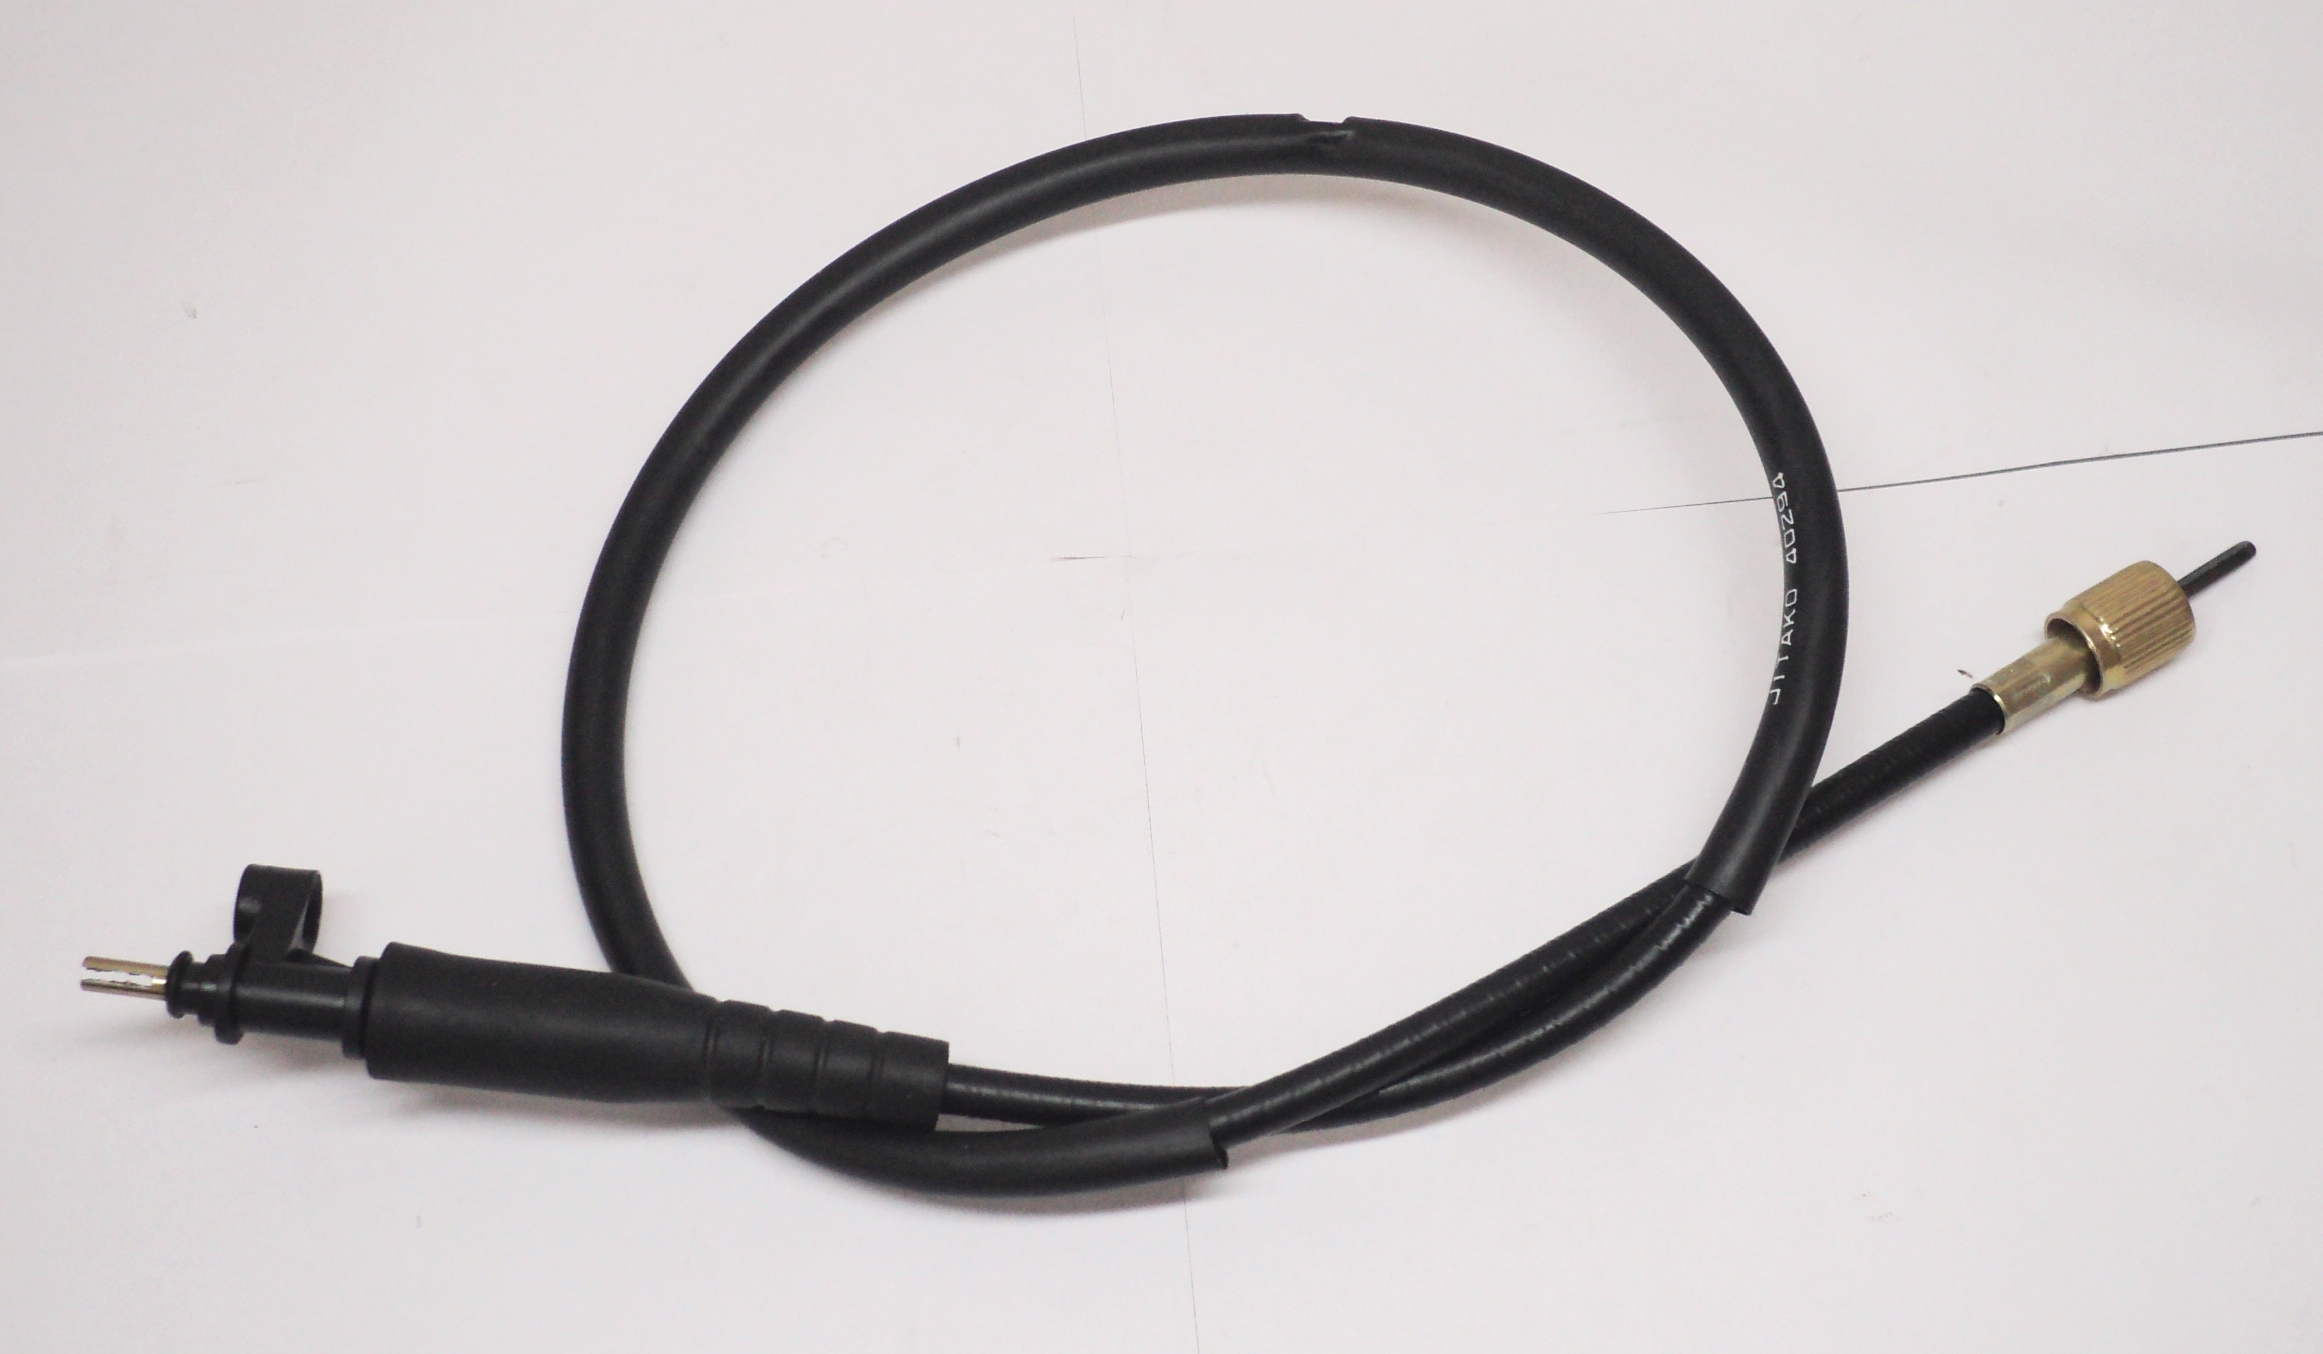 Cable Aspirometro Platina